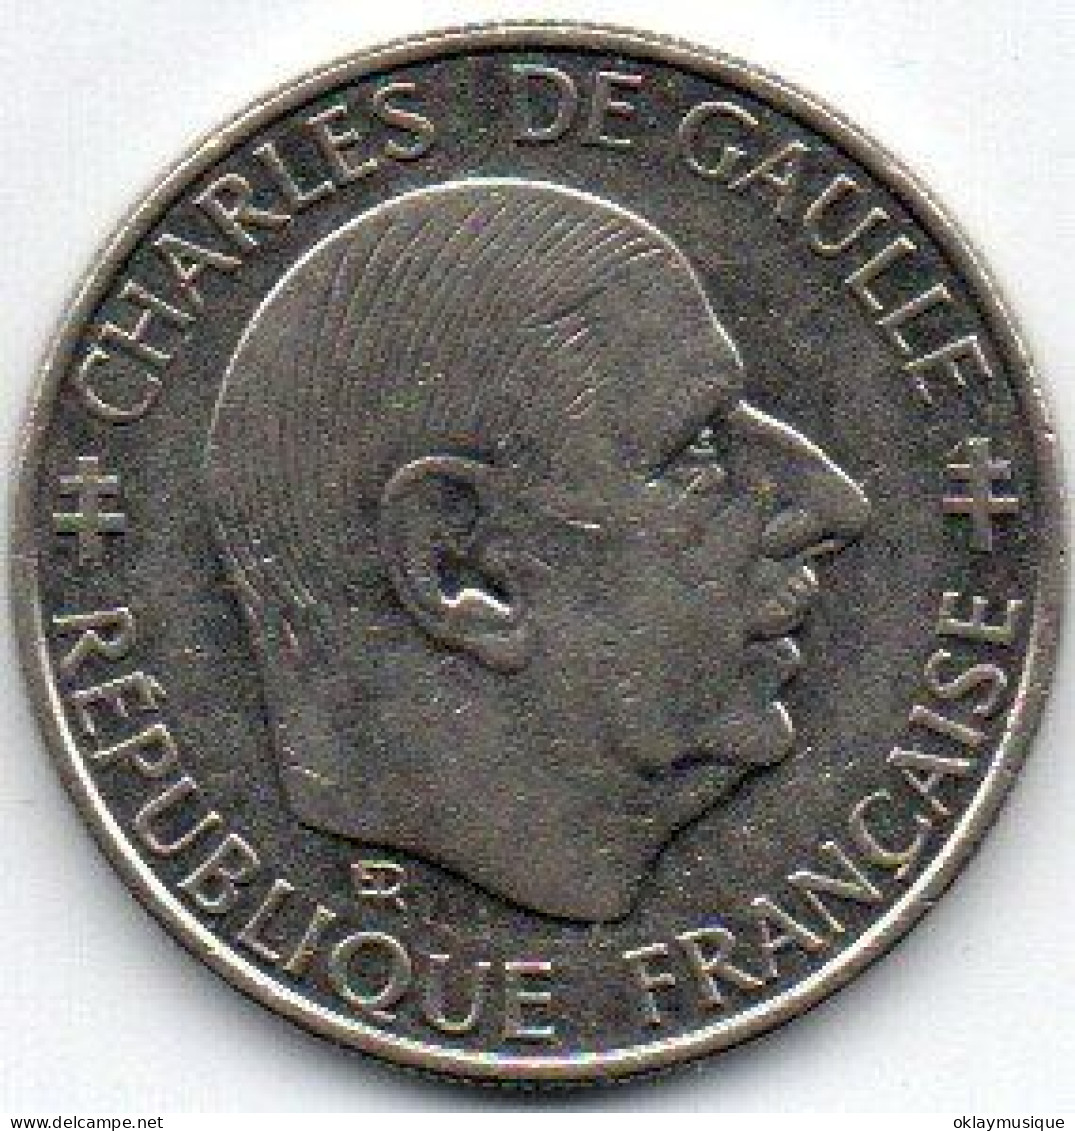 1 Franc 1988 - 1 Franc